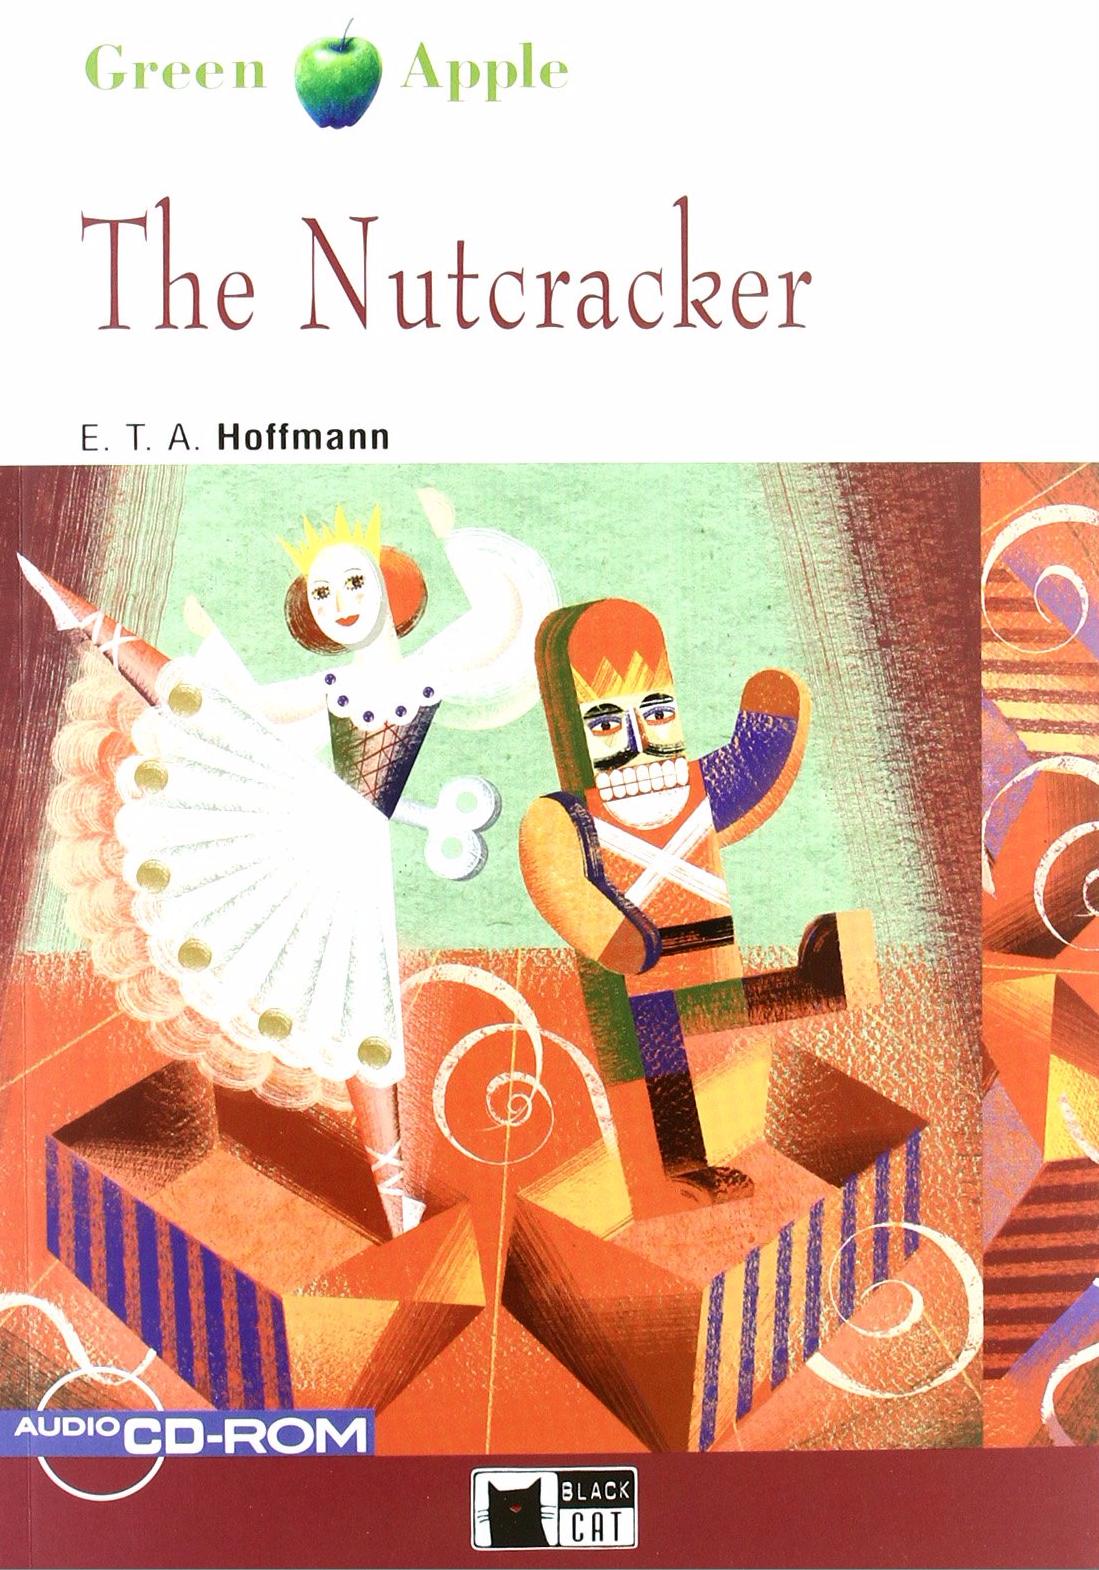 The Nutcracker + Audio CD-ROM